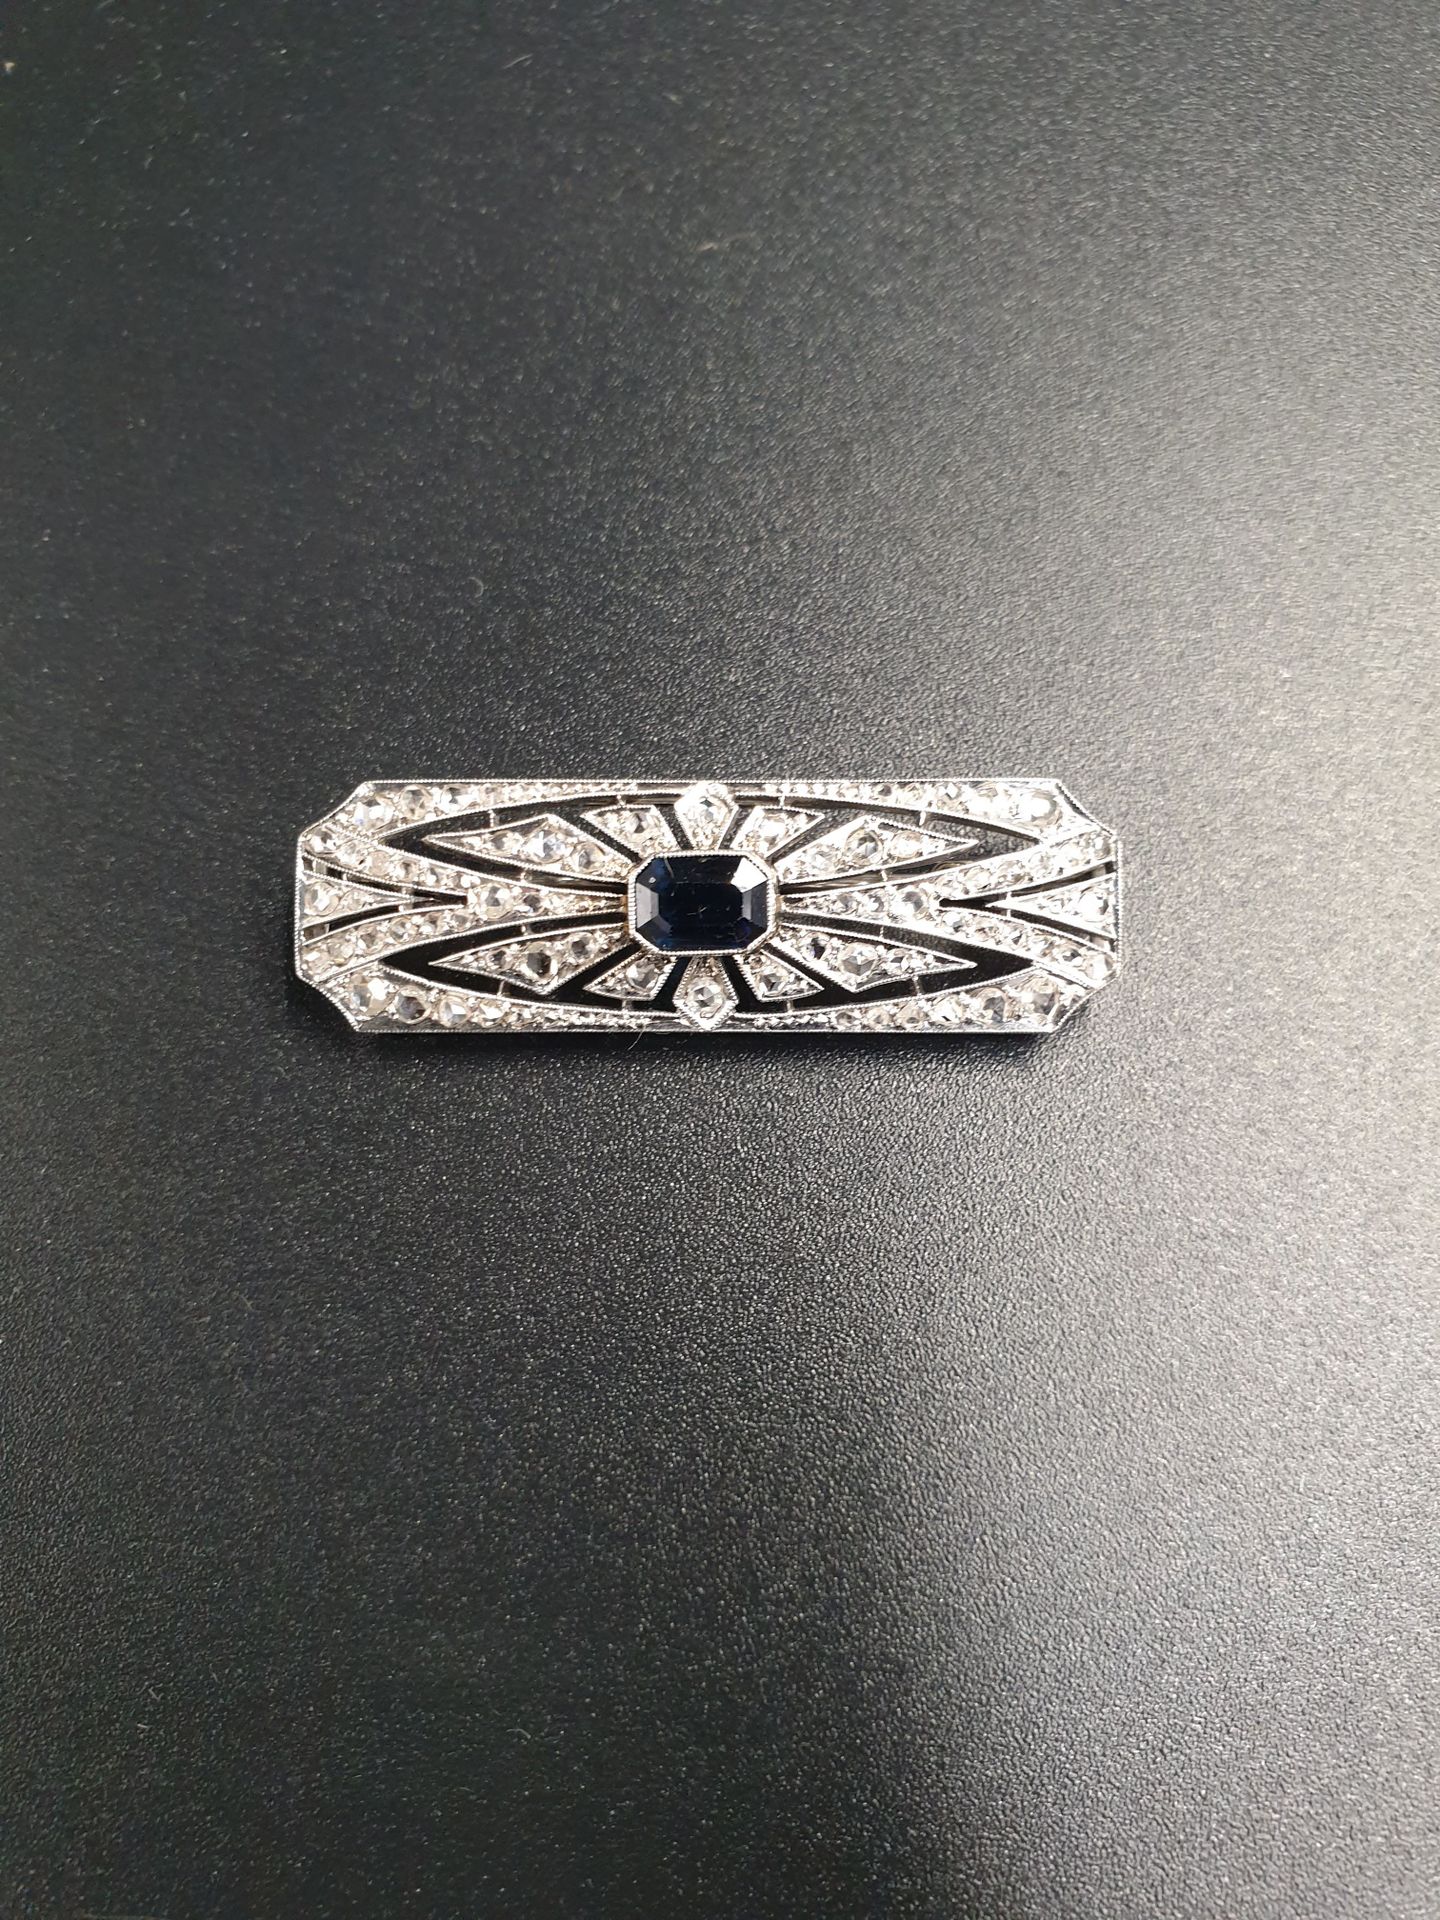 Null 装饰艺术风格的白金胸针，镶嵌着一颗刻面蓝宝石，周围有小钻石。
毛重：约6.93克。
长度约为4.5厘米